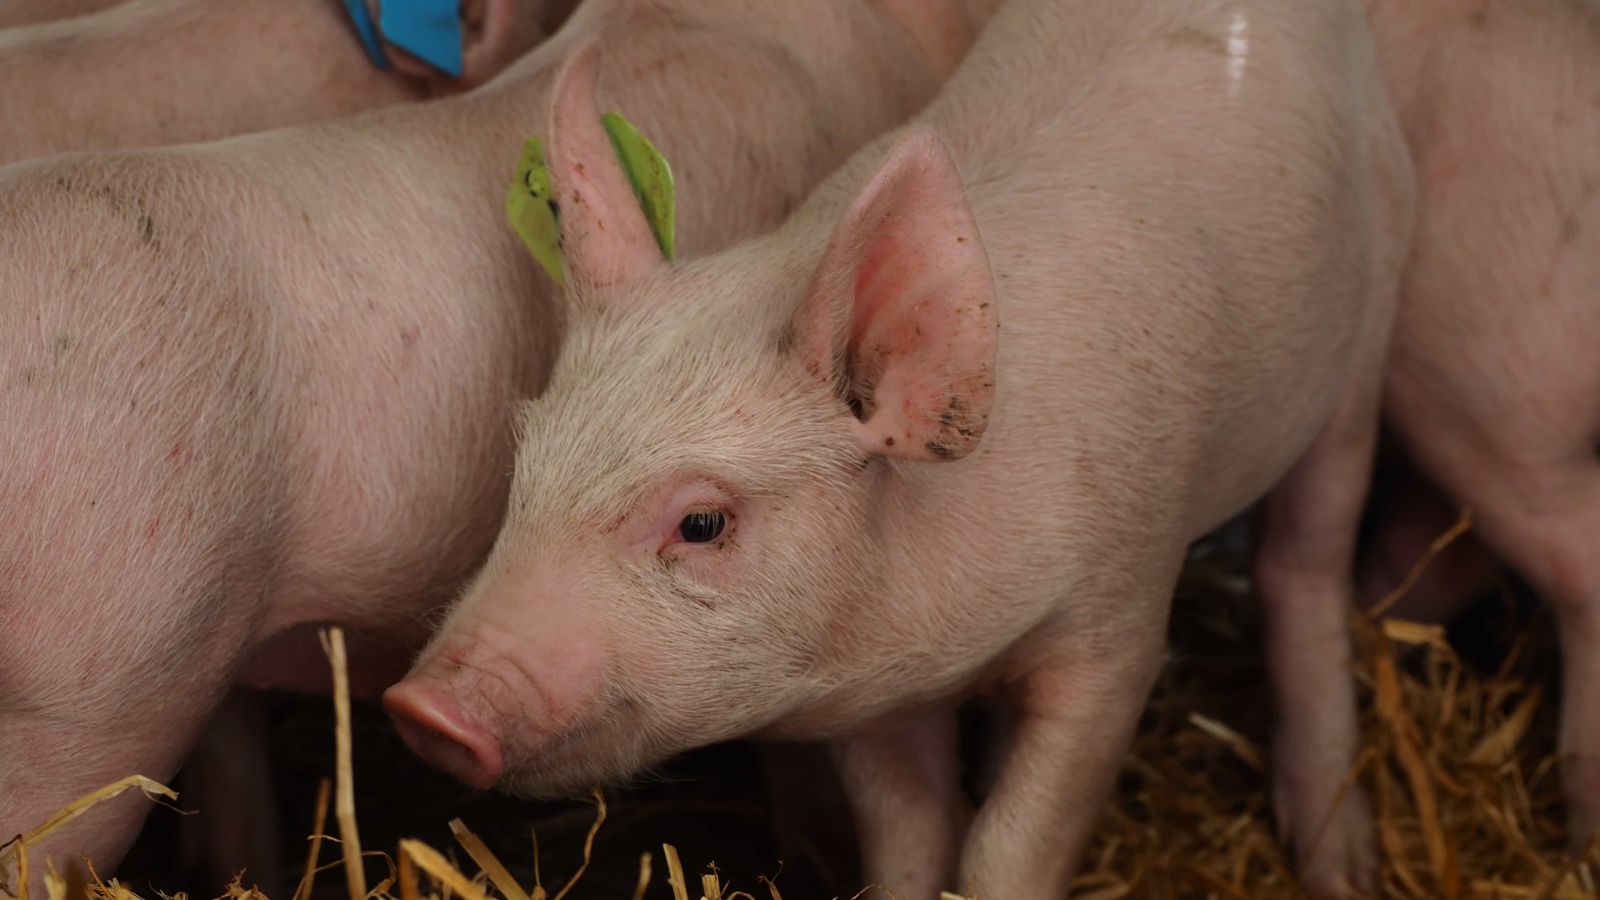 Tracking killer T cells in pigs for flu vaccine development